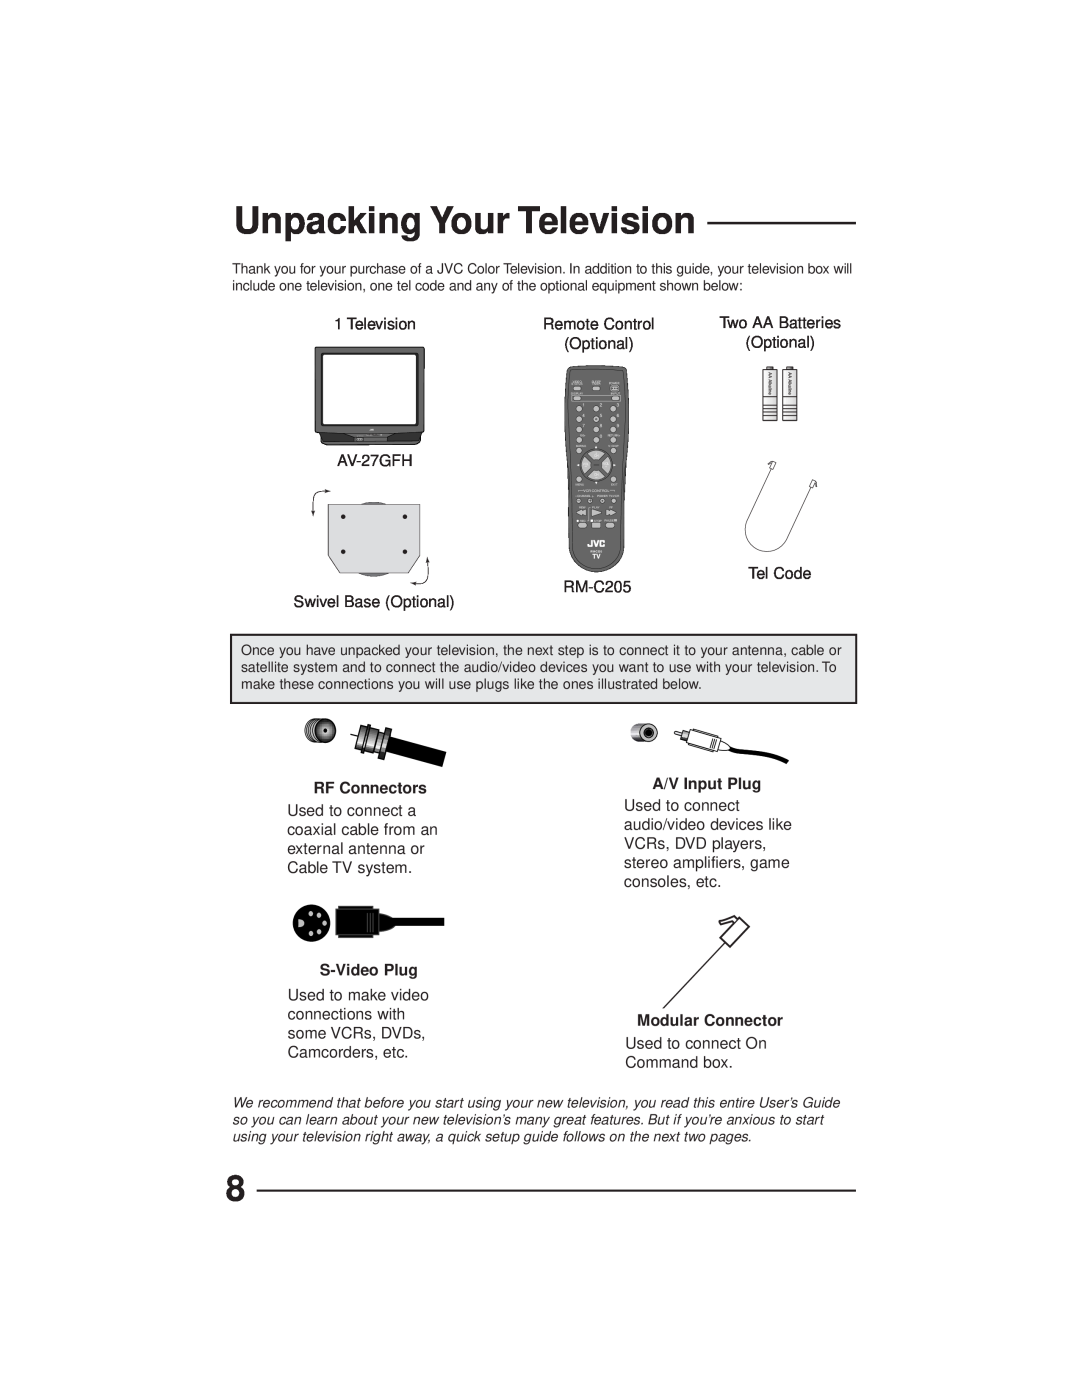 JVC AV-27GFH manual Unpacking Your Television, RF Connectors, S-Video Plug, A/V Input Plug, Modular Connector 